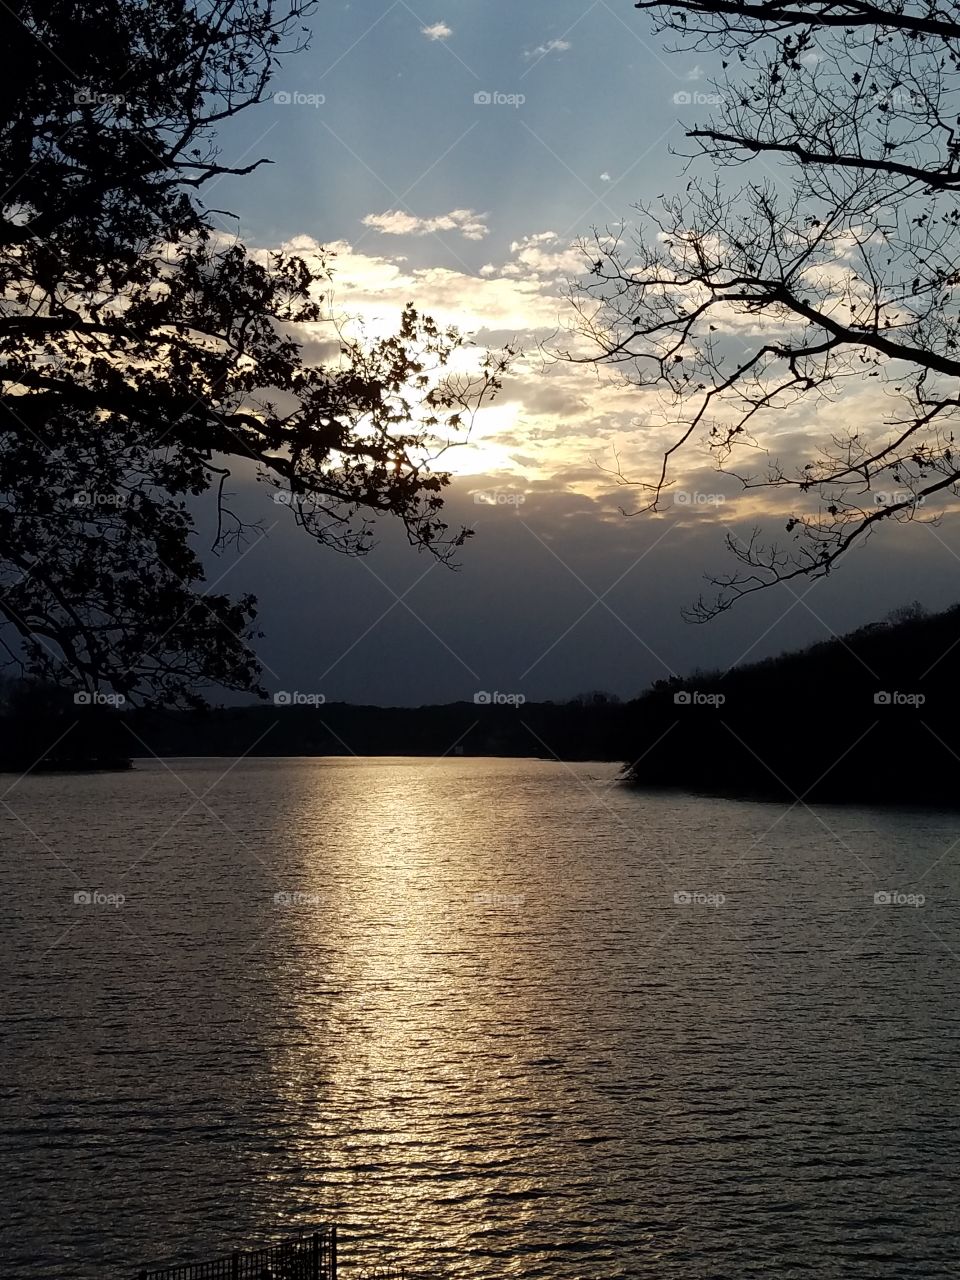 Sunlight reflecting on the lake